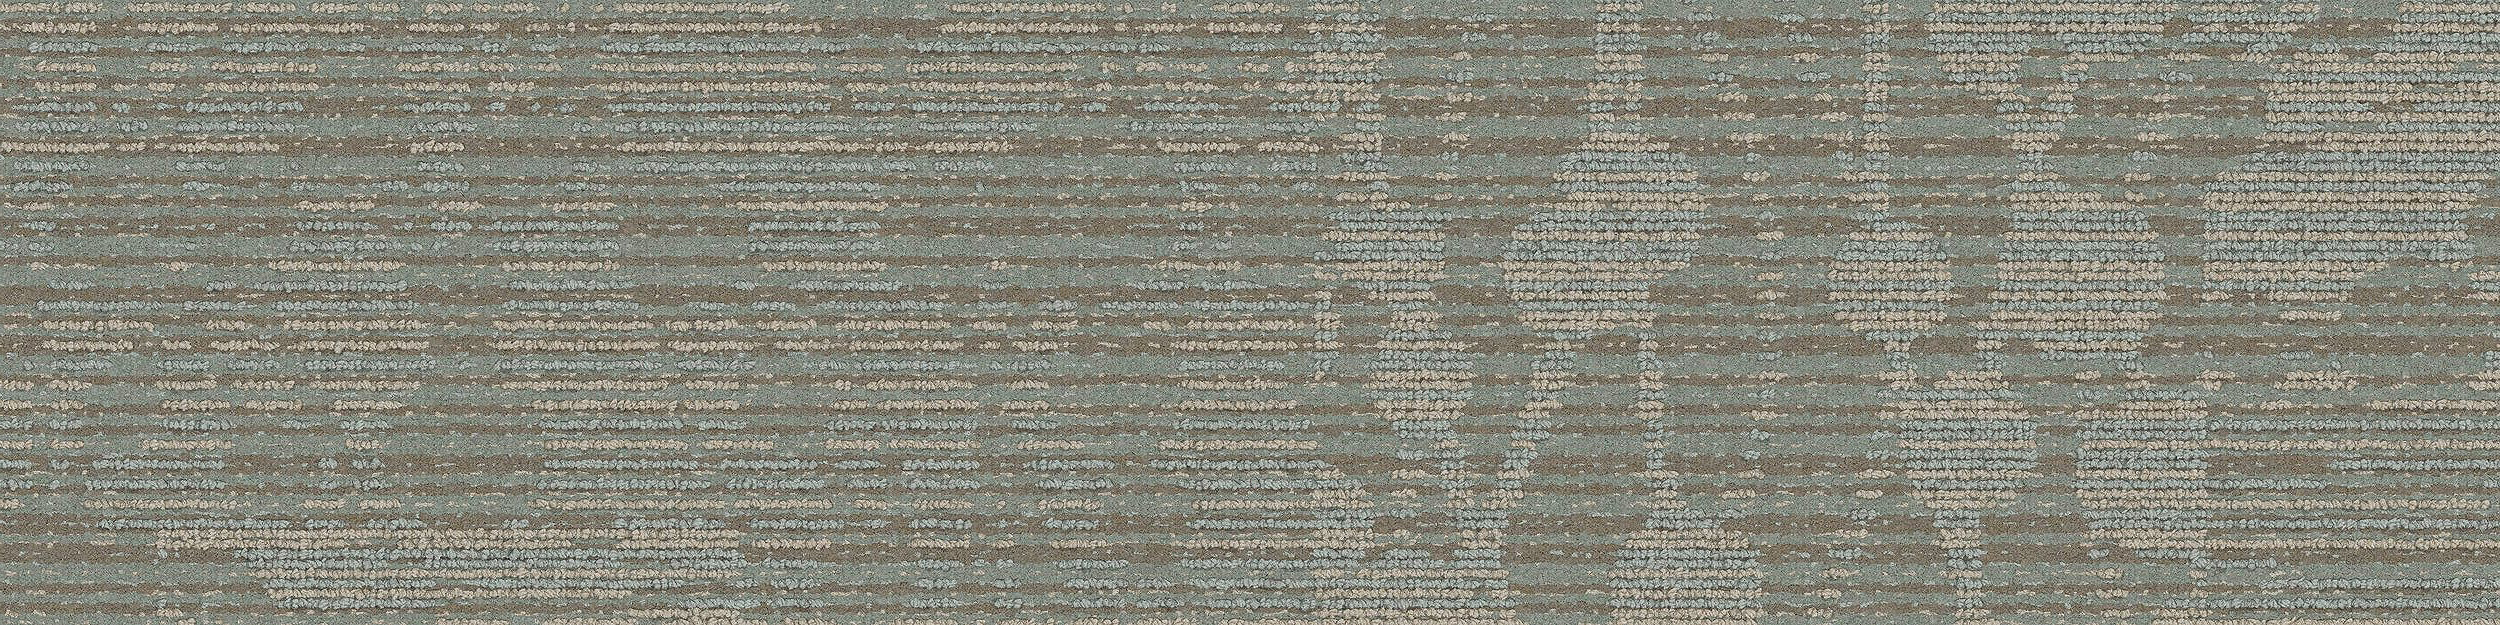 WE154 Carpet Tile In Patina image number 4